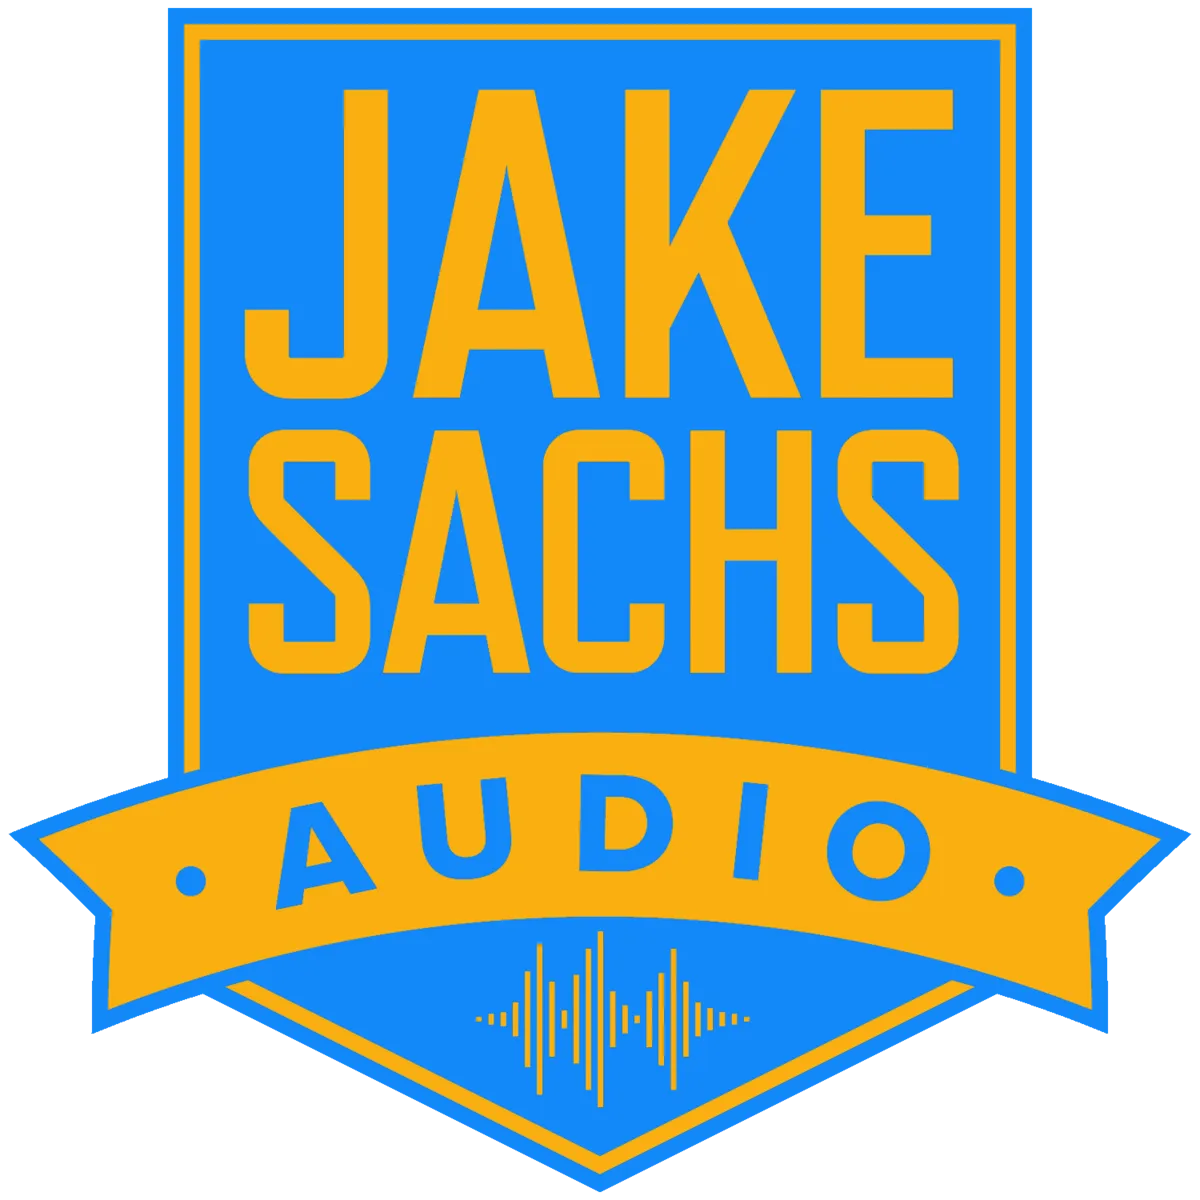 Jake Sachs Audio